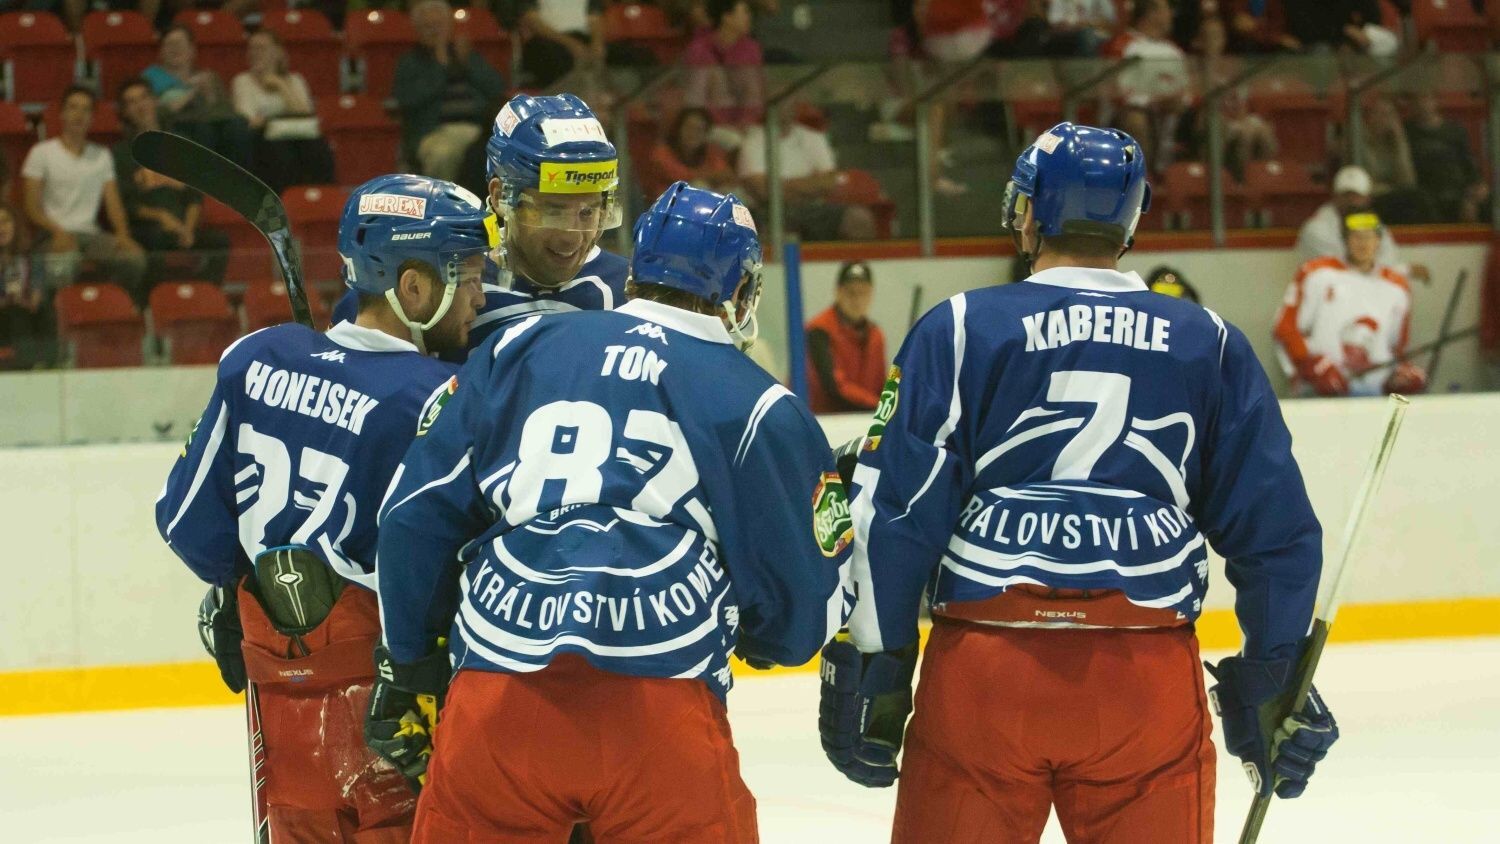 Hokej: Olomouc-Kometa Brno: Antonín Honejsek, Petr Ton a Tomáš Kaberle